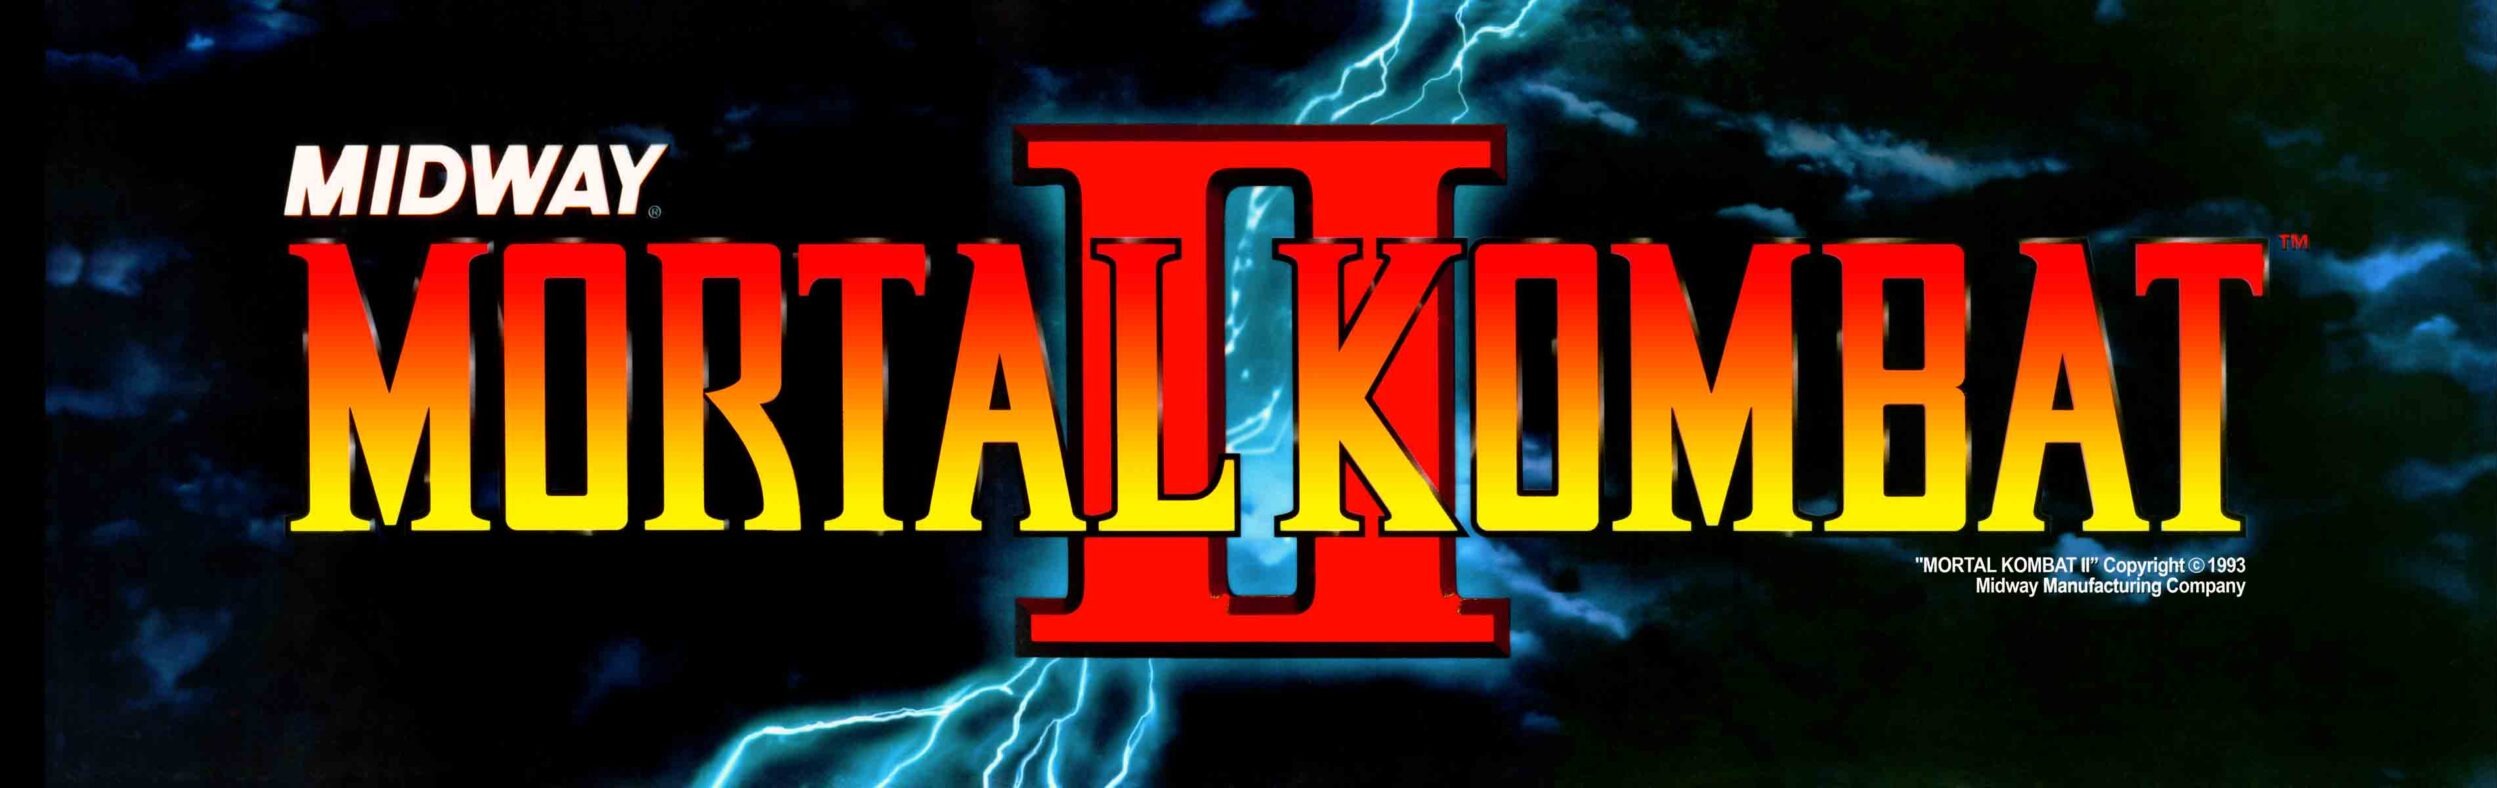 [Fatality Friday] Woche 2: Mortal Kombat II